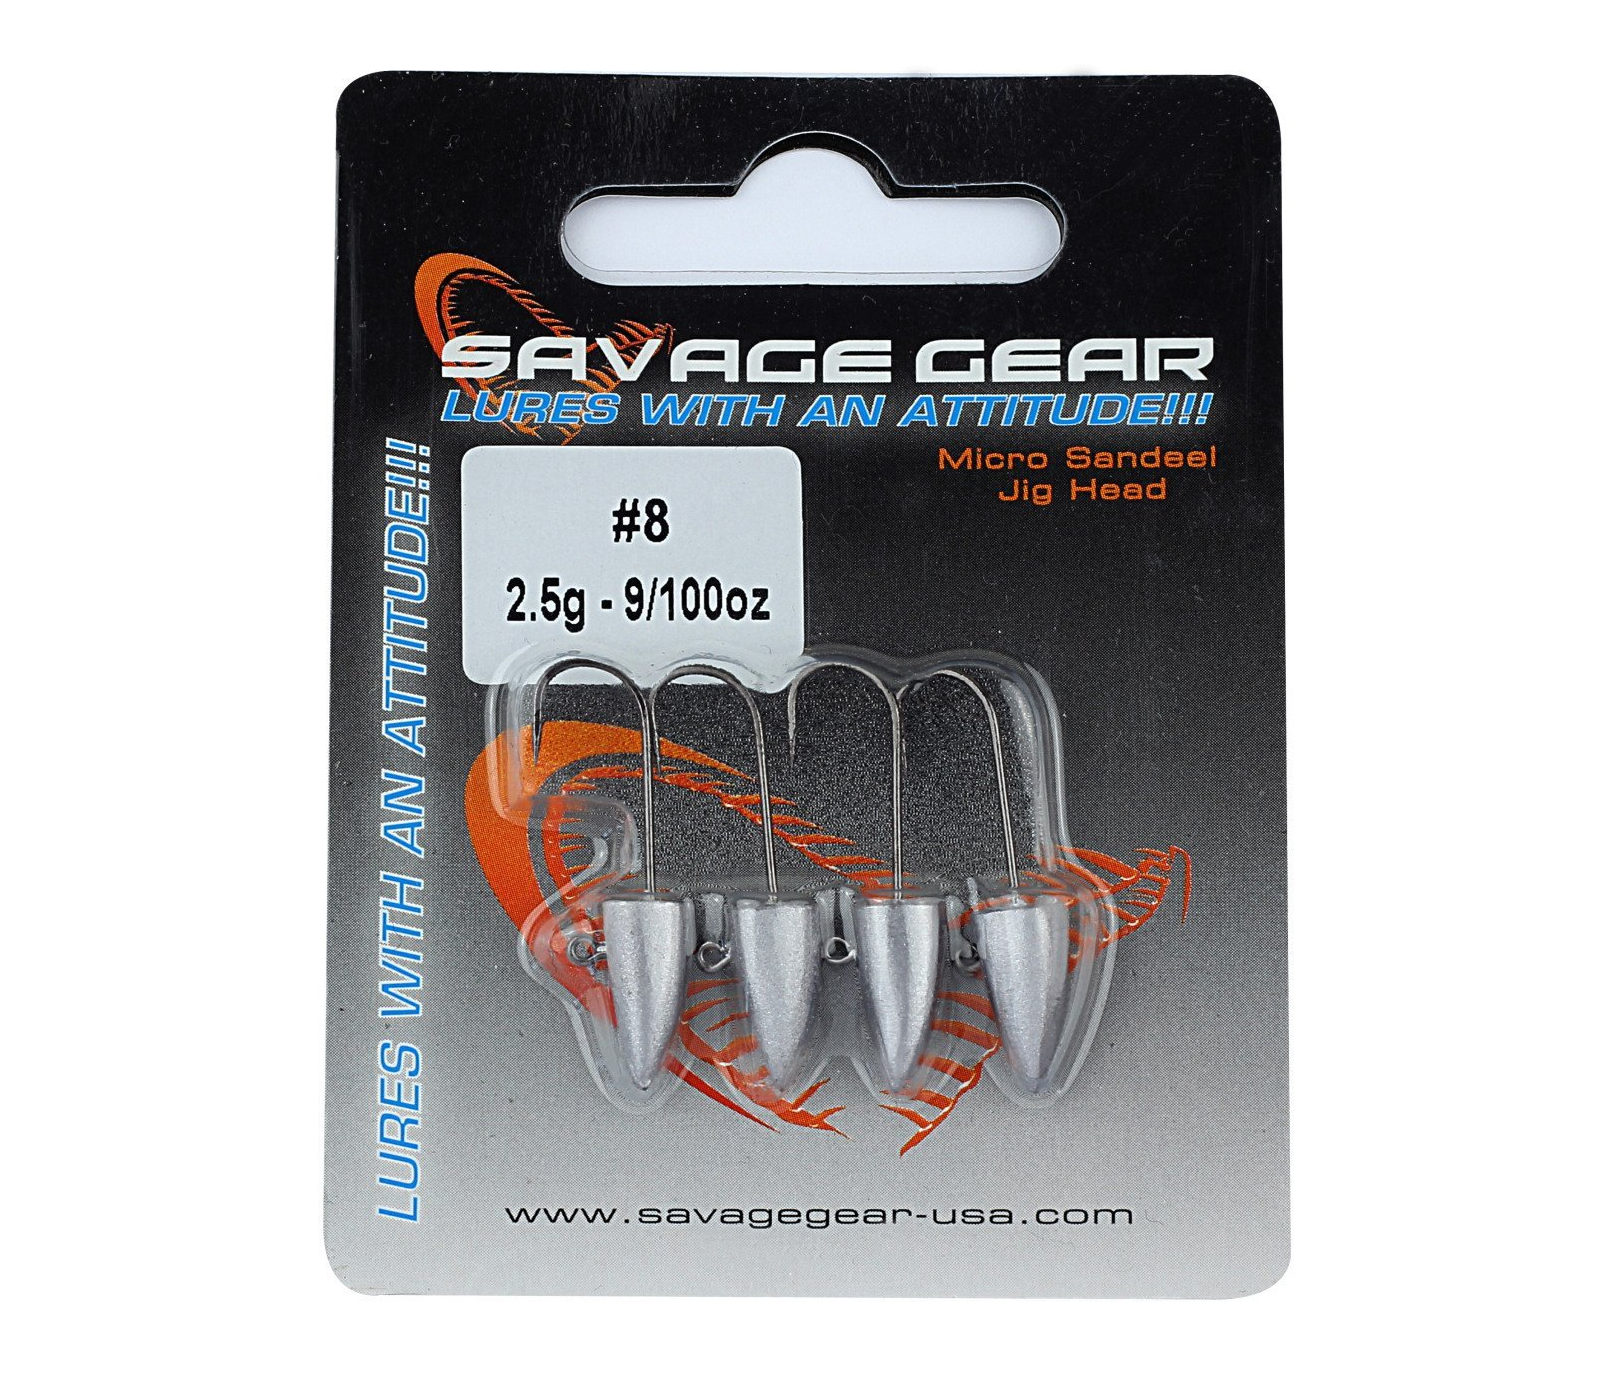 Savage gear LRF Micro sandeel jighead